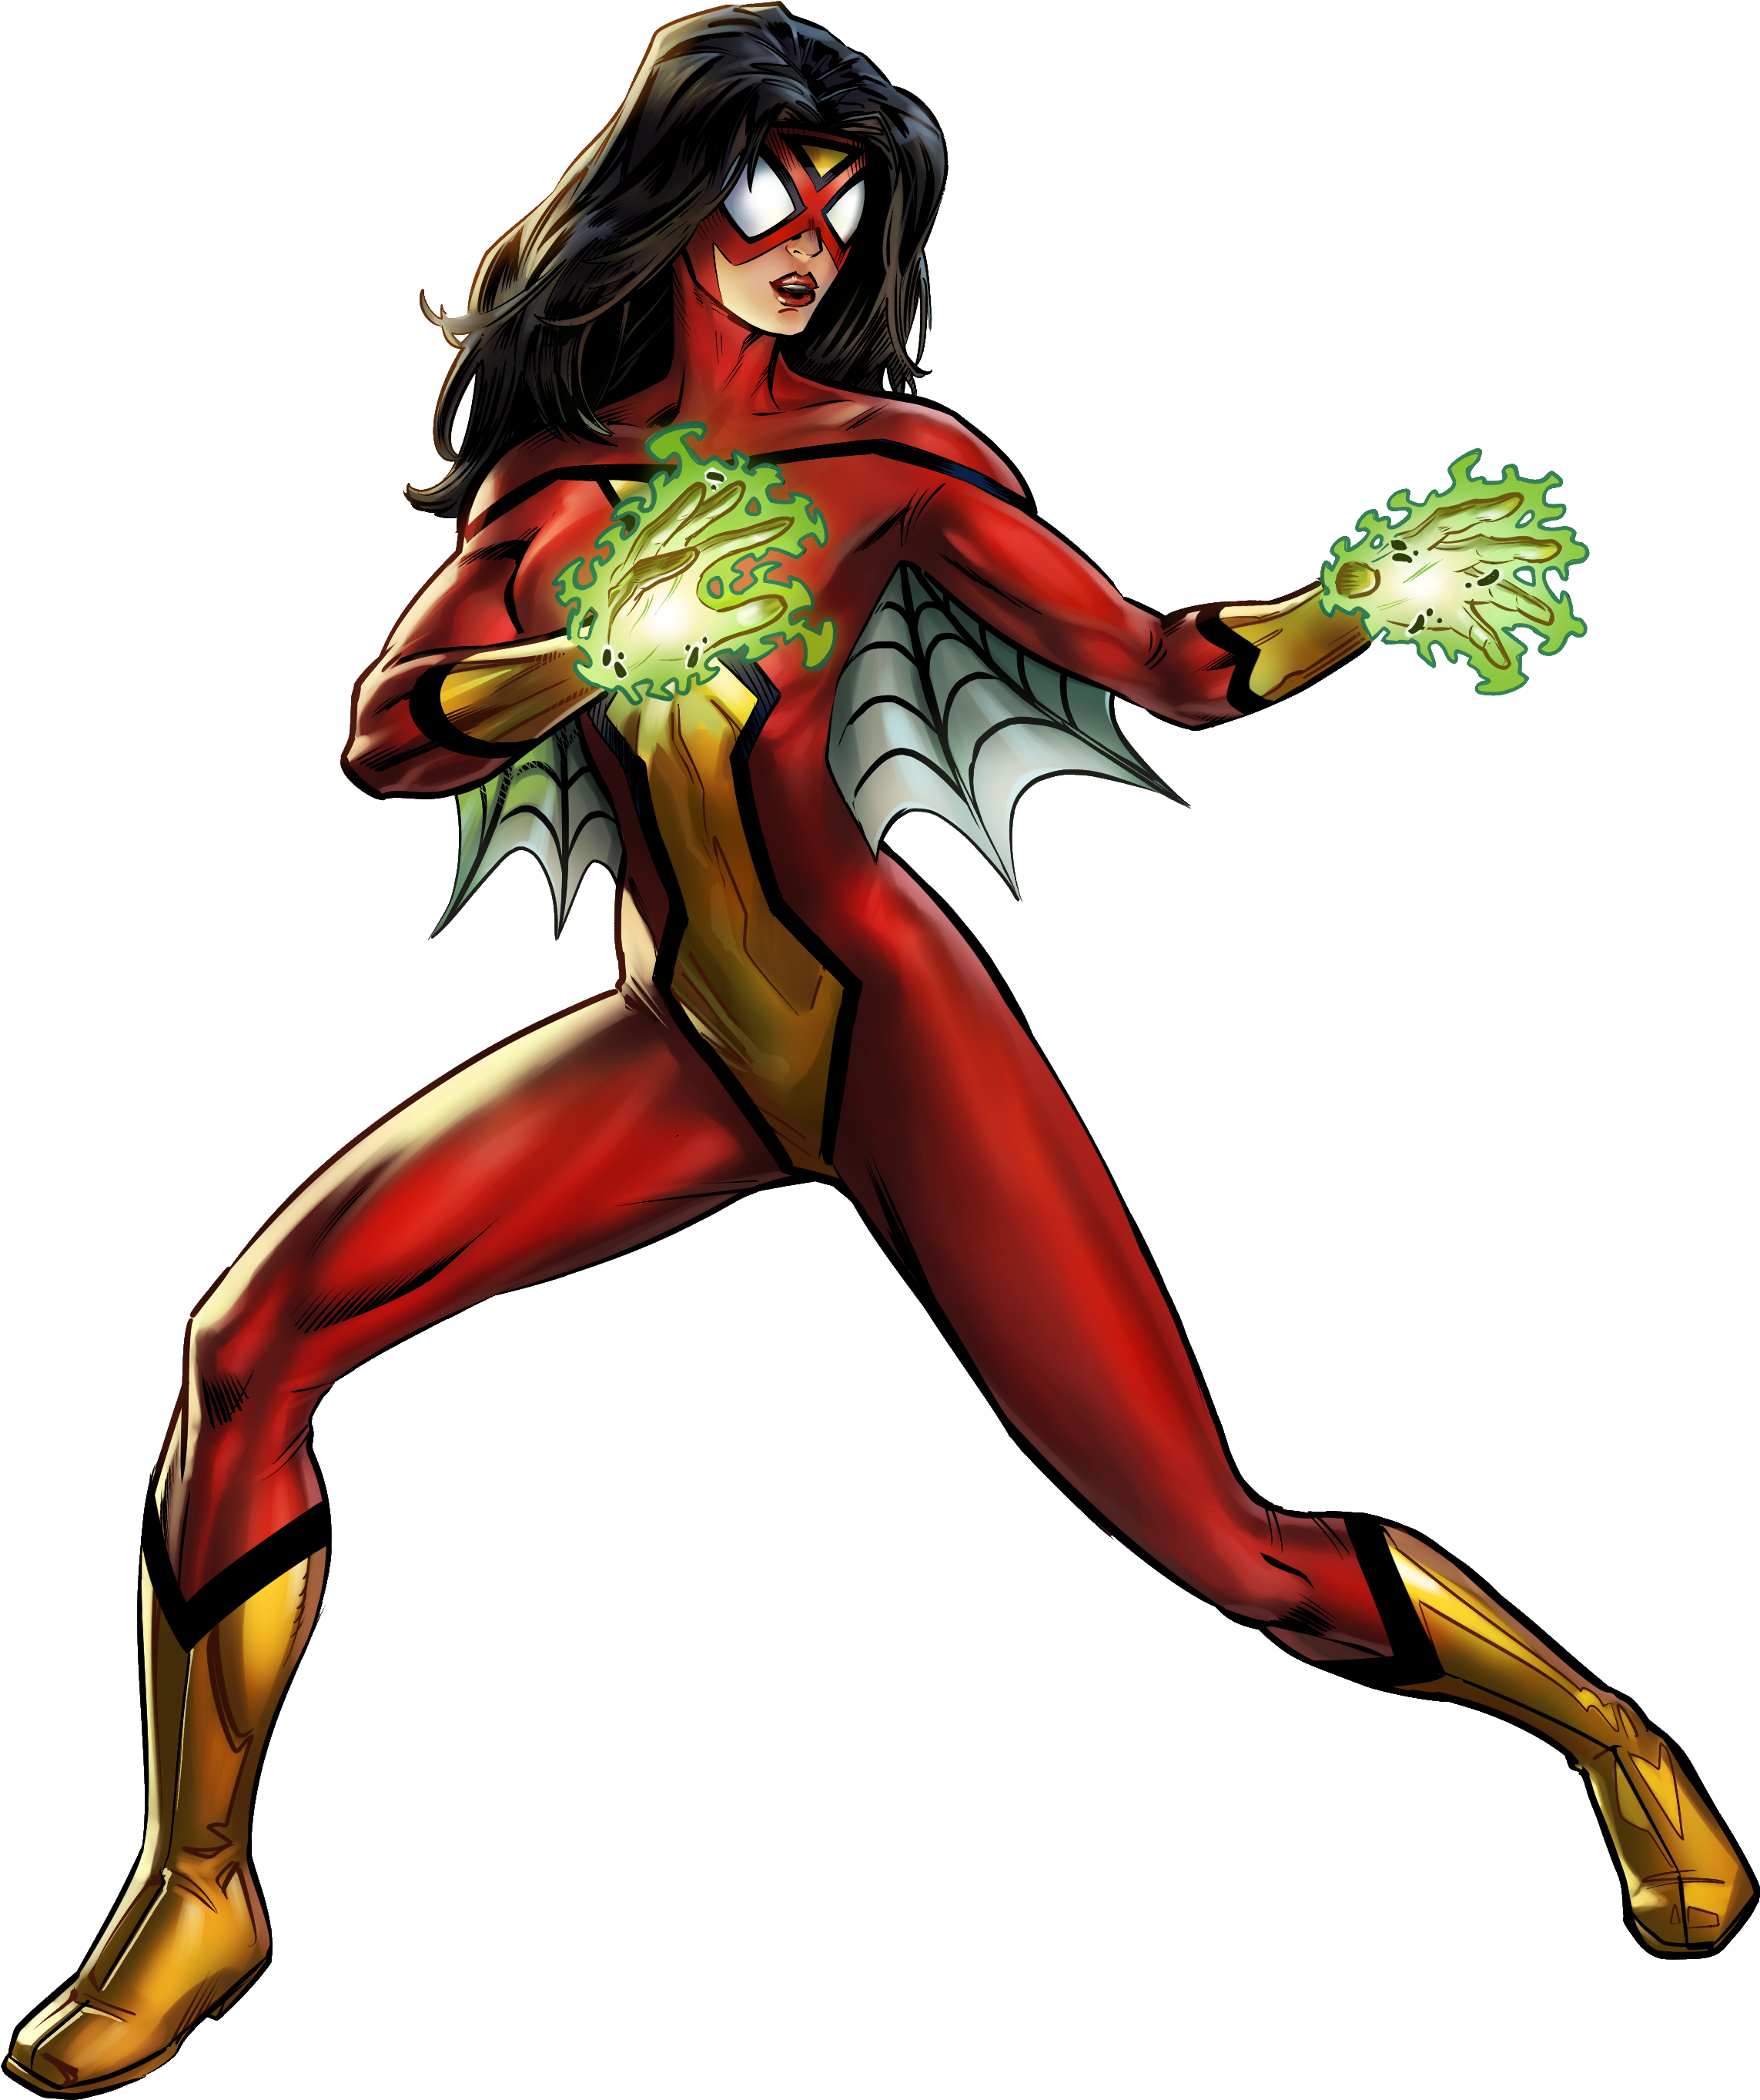 2550 X 3300 5 - Spider Woman Avengers Alliance 2 (2550x3300)